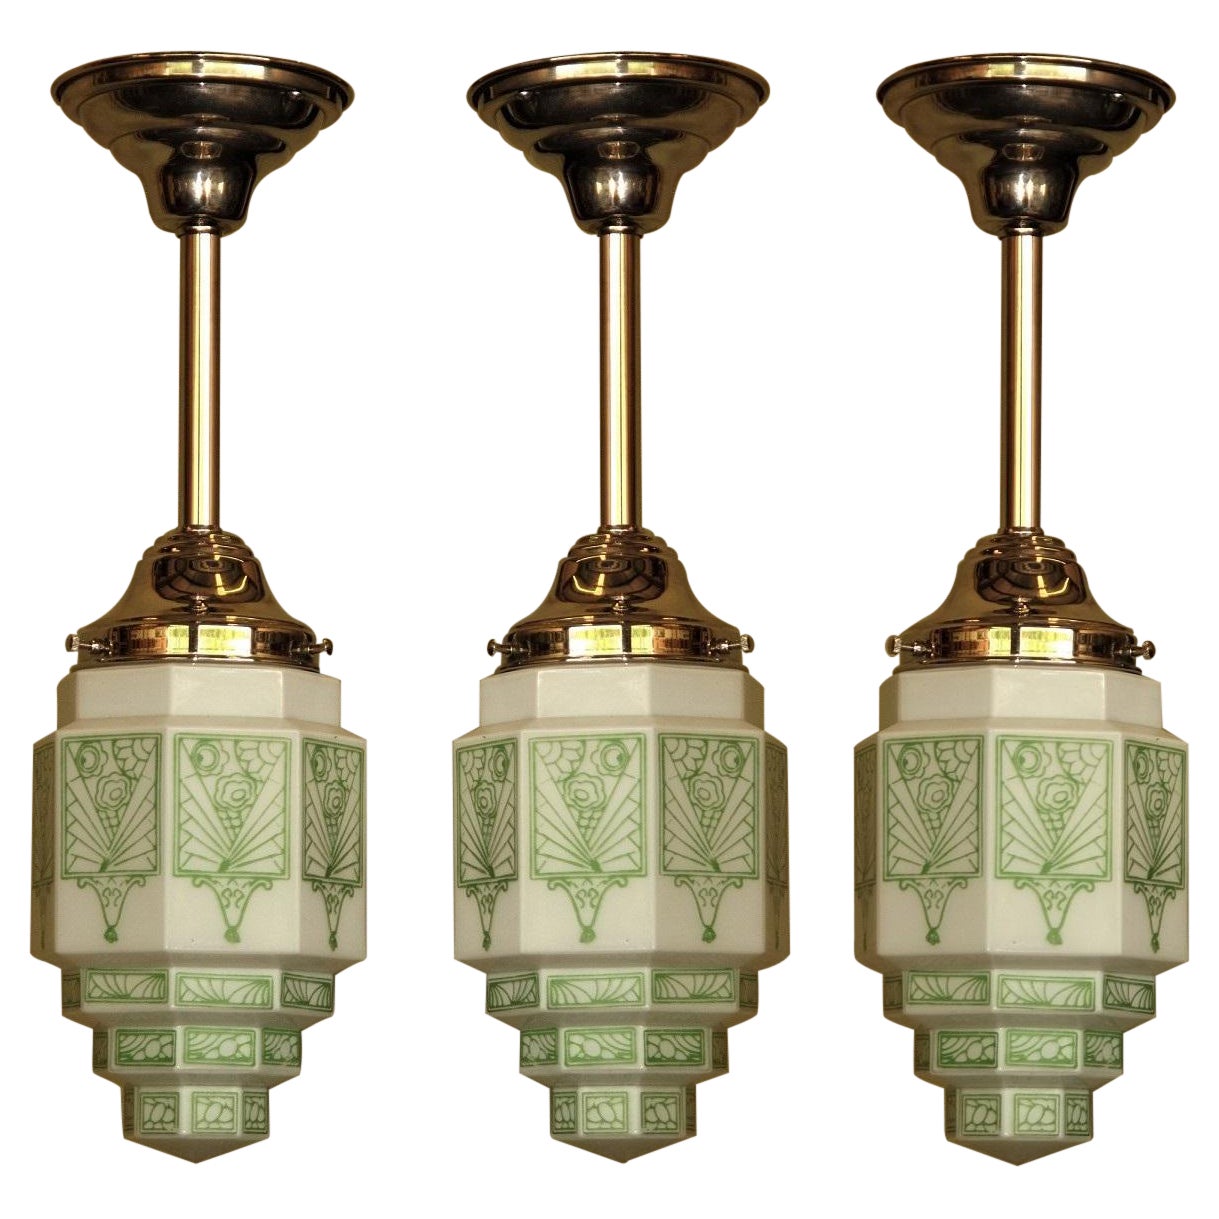 Three Art Deco Pendants with Green Deco Designs by Fostoria circa 1928